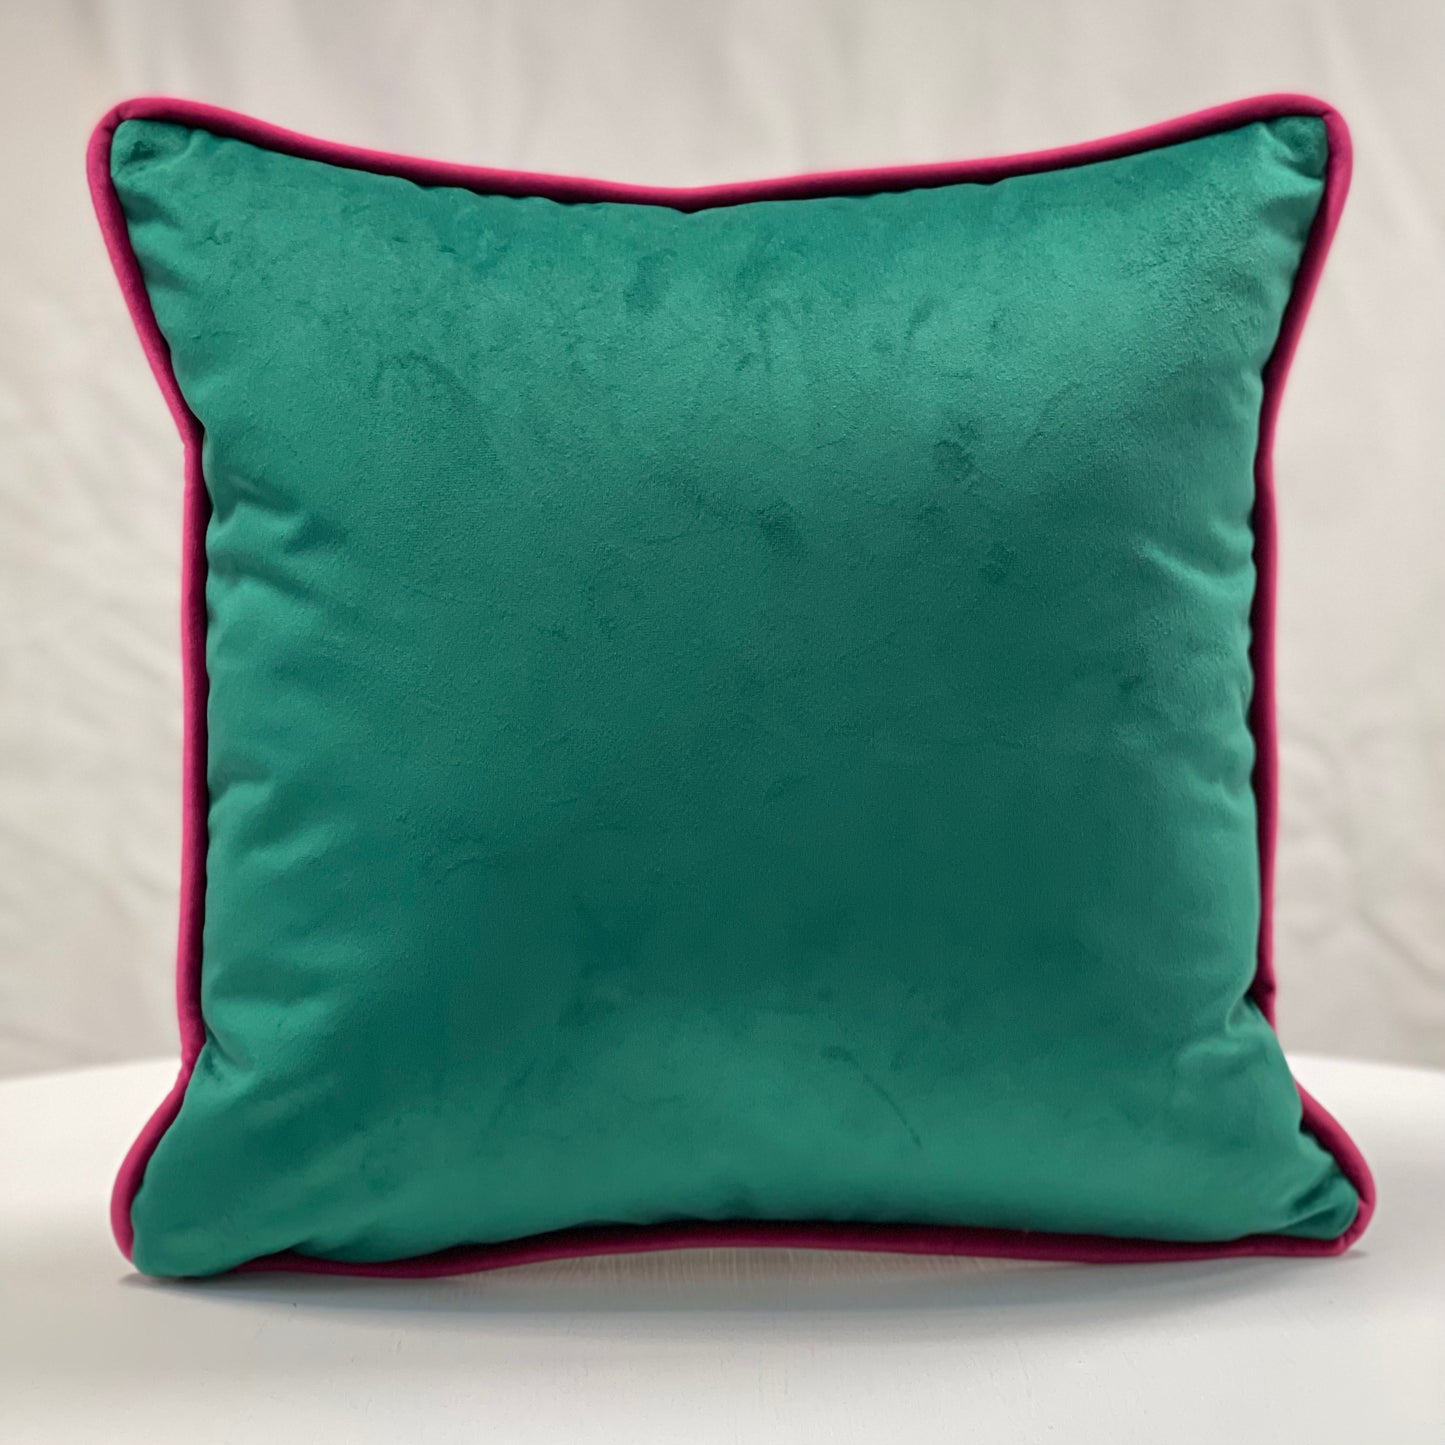 Emerald green velvet piped cushion